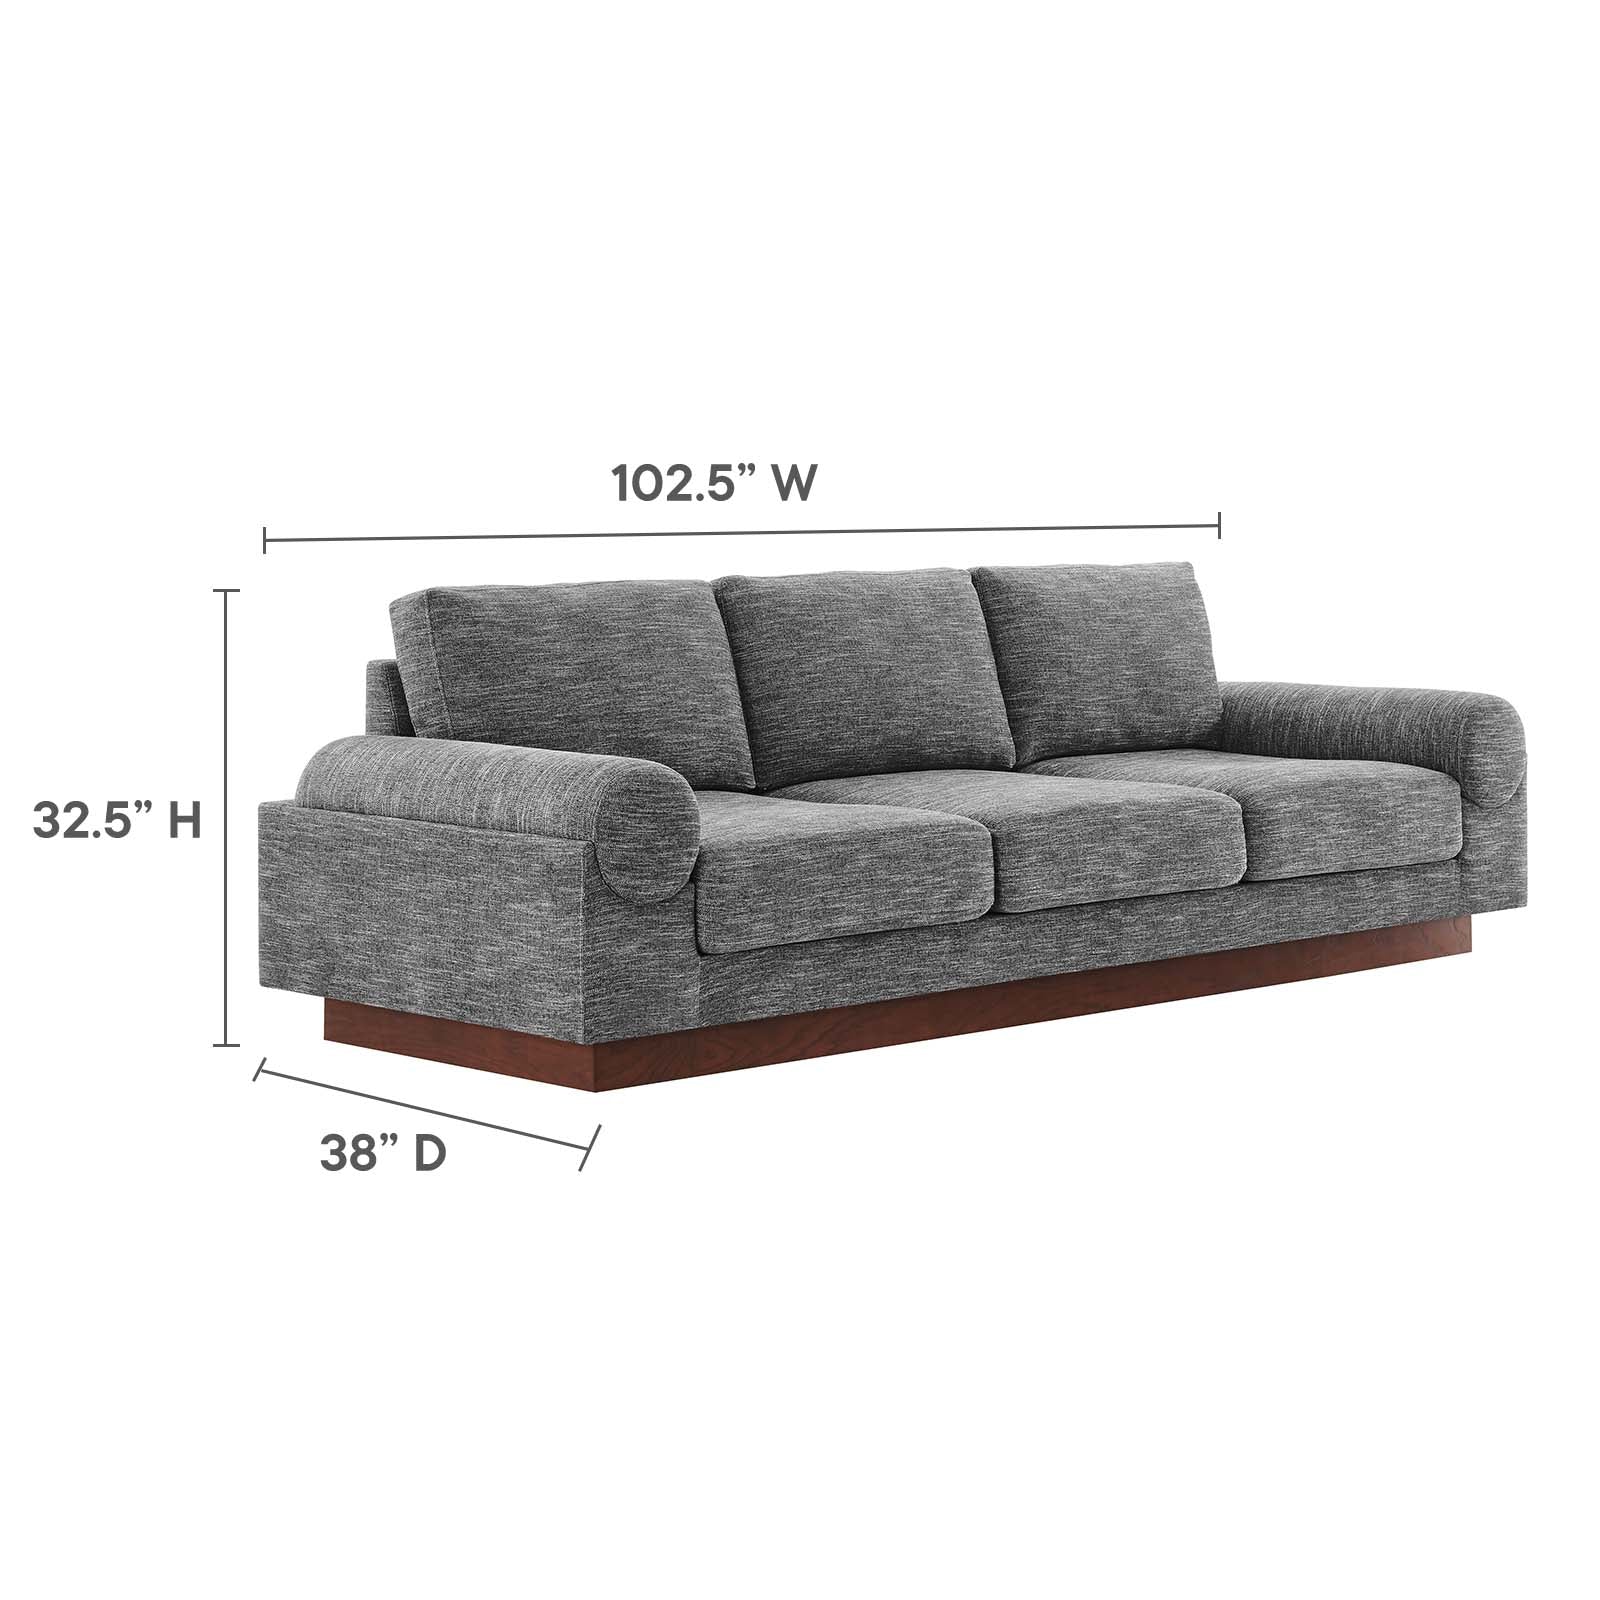 Oasis Upholstered Fabric Sofa - East Shore Modern Home Furnishings